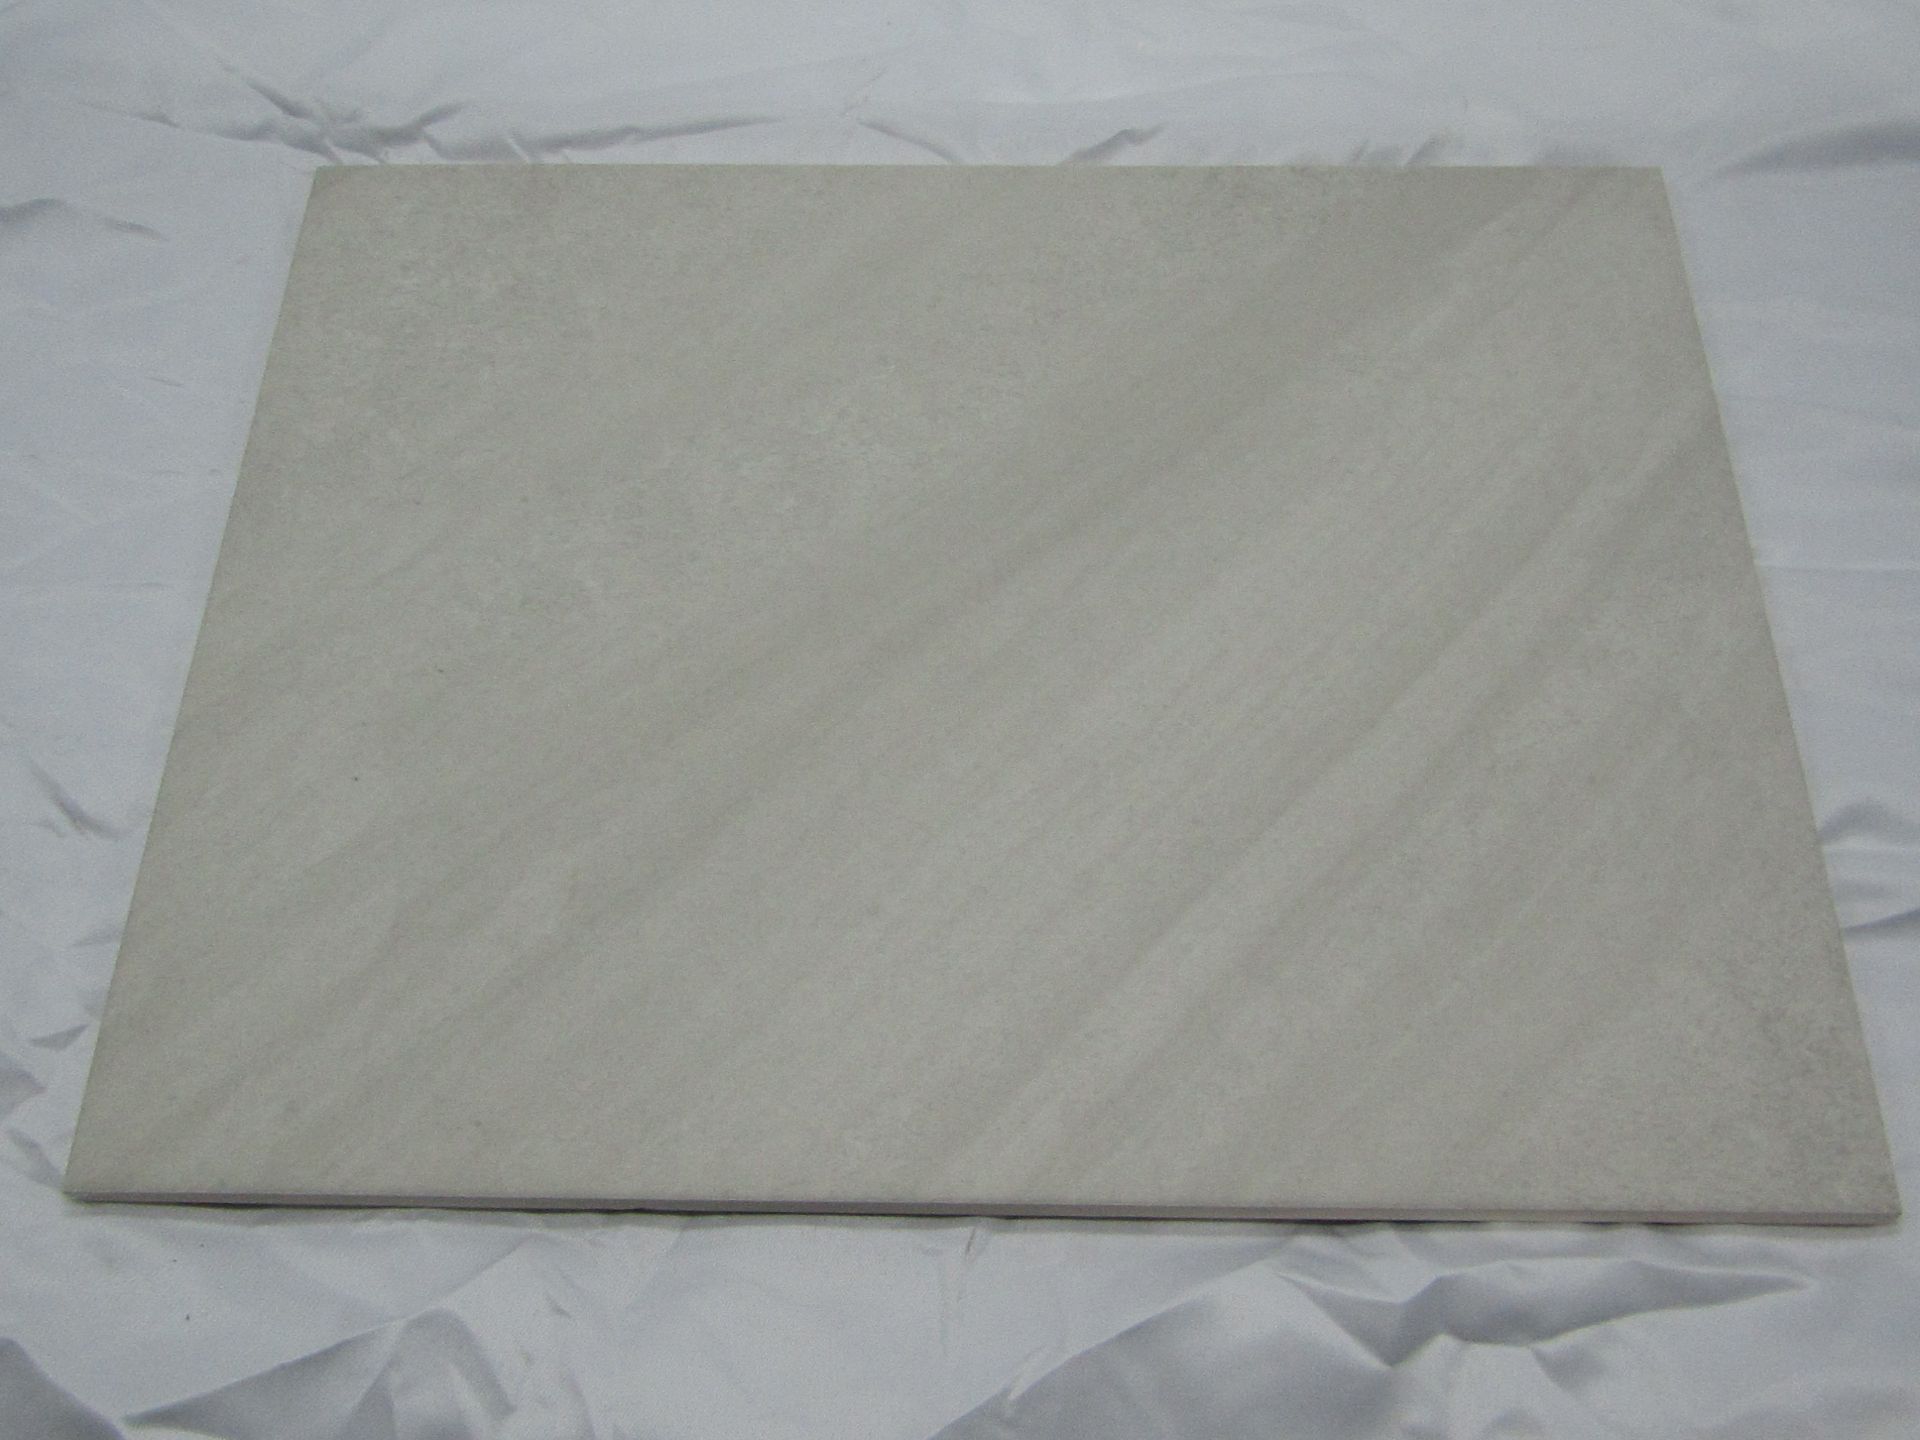 A pallet of 10x packs of 5 Johnsons Tiles 600x300mm Ashlar warm taupe matt wall and floor tiles,